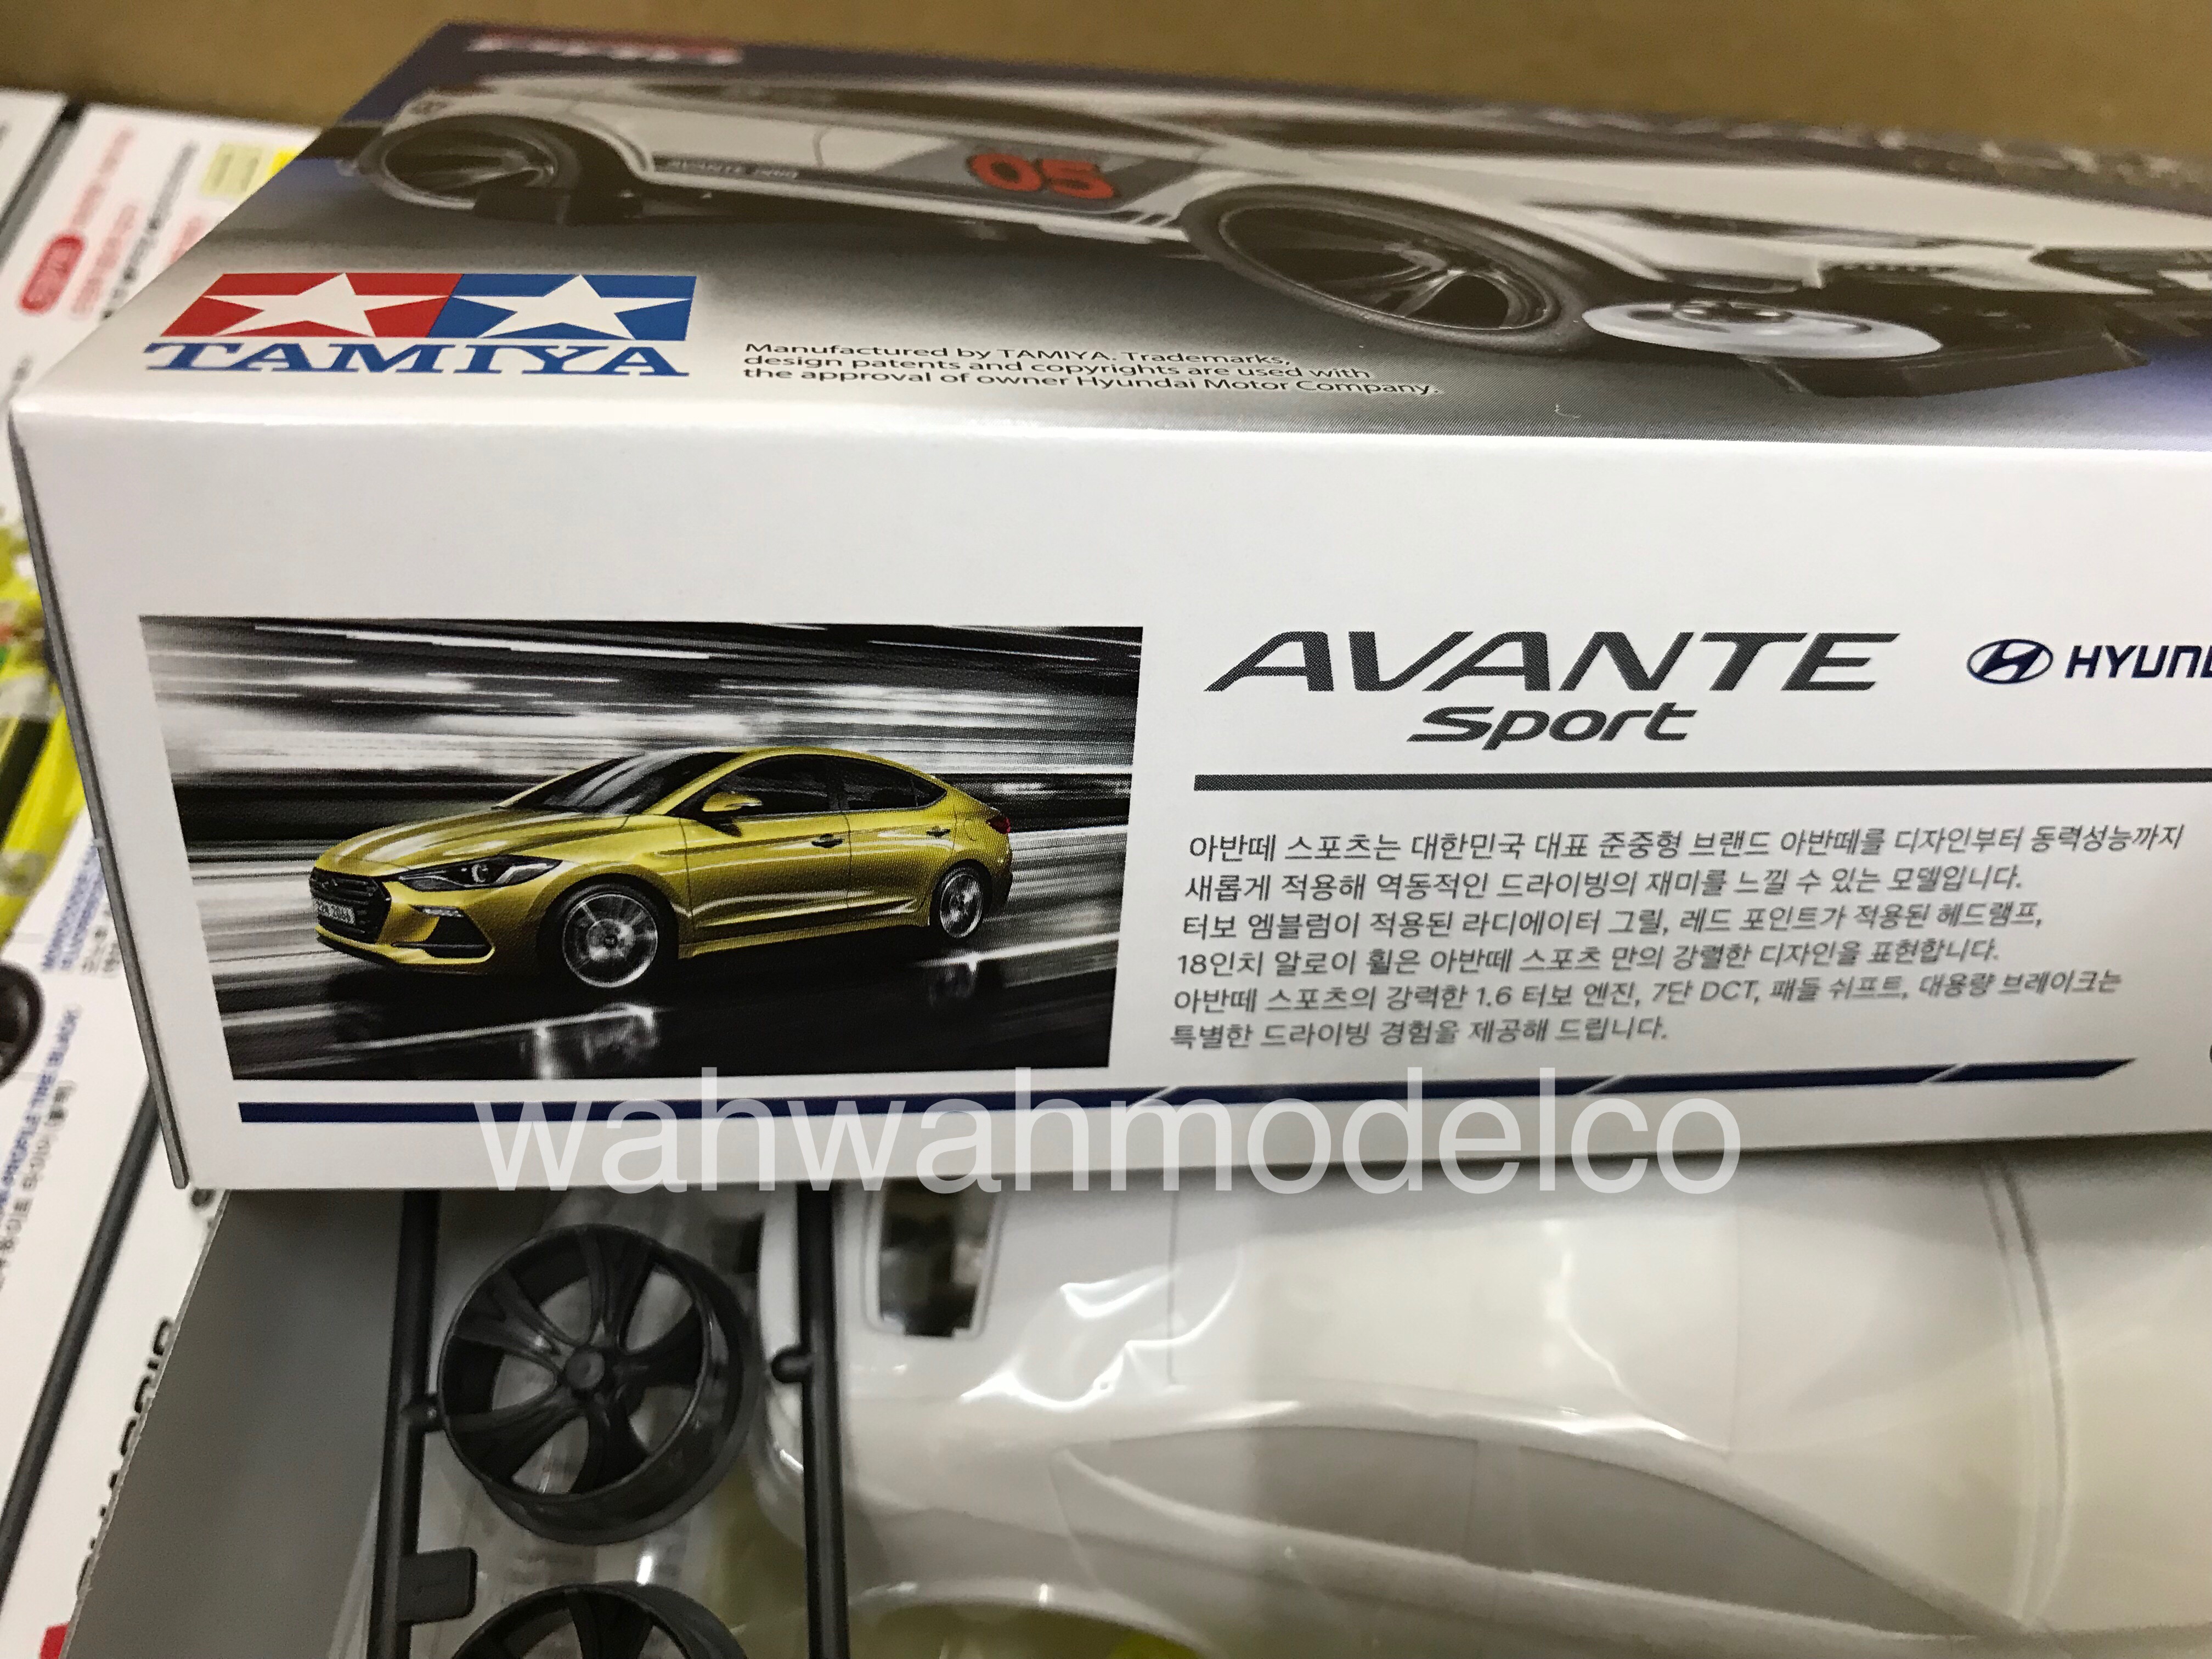 Tamiya 92382 1/32 Mini 4WD Pro Car Kit MA Chassis Hyundai Avante Sport Elantra 